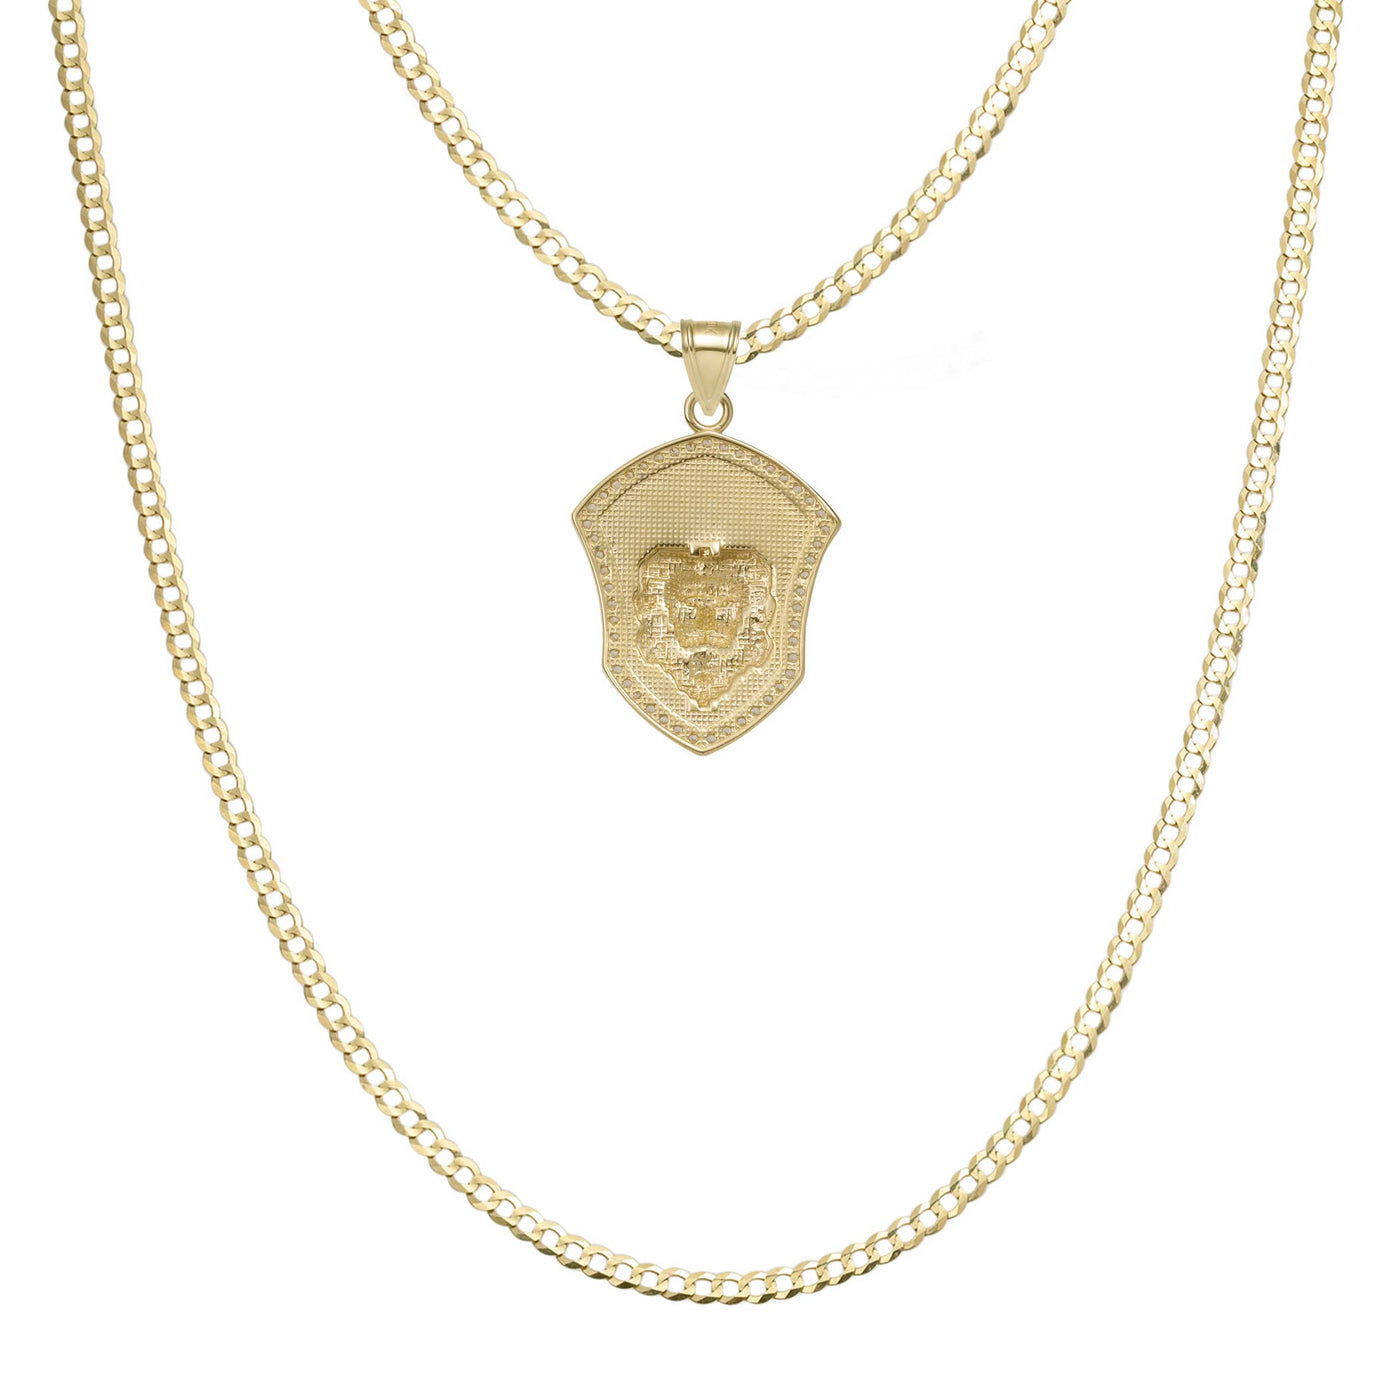 1 3/8" CZ Lion King Medallion Pendant & Chain Necklace Set 10K Yellow Gold